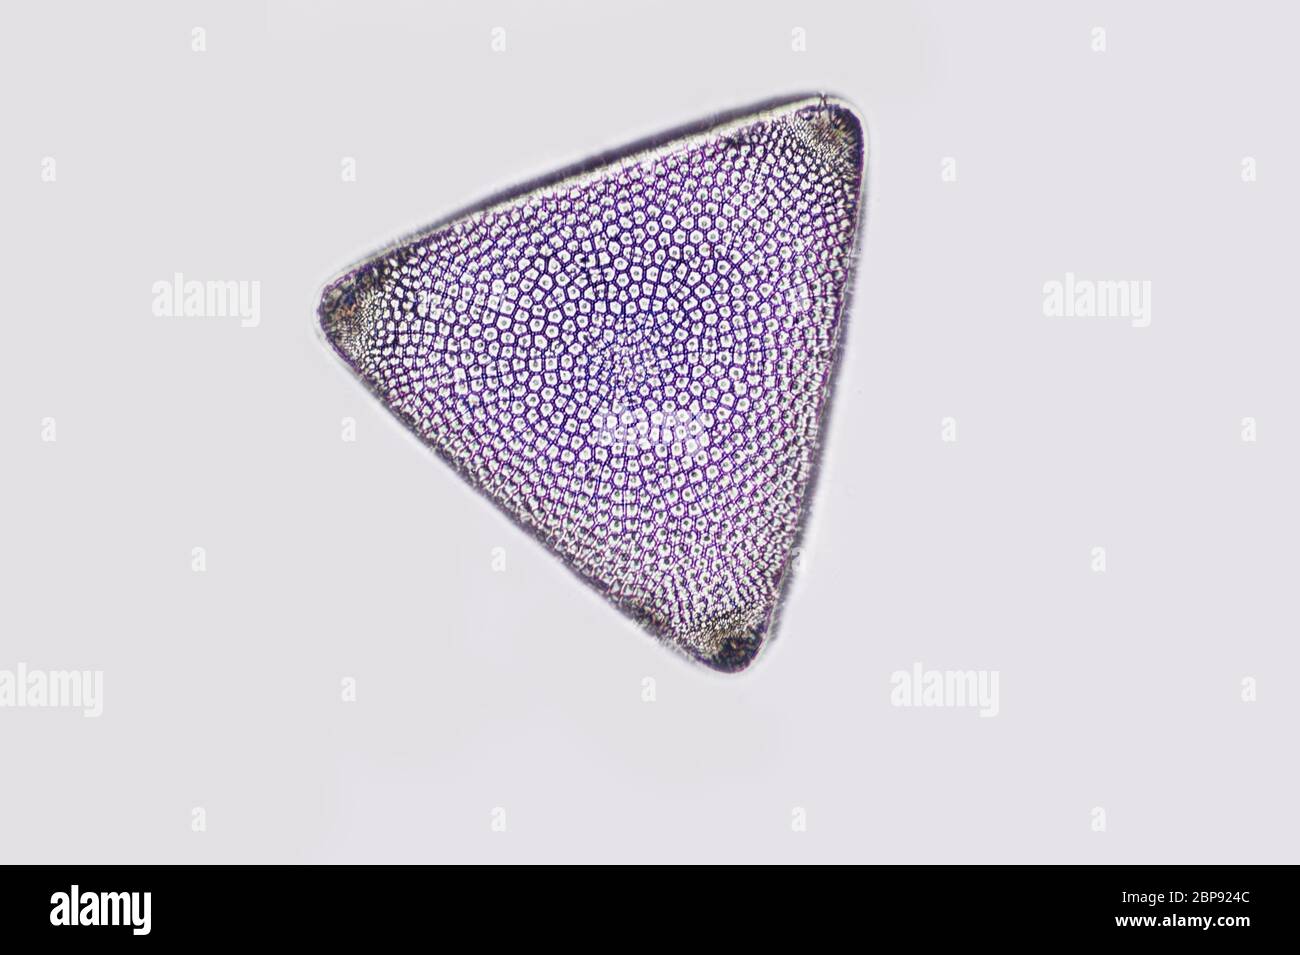 Diatom, microscope view Stock Photo